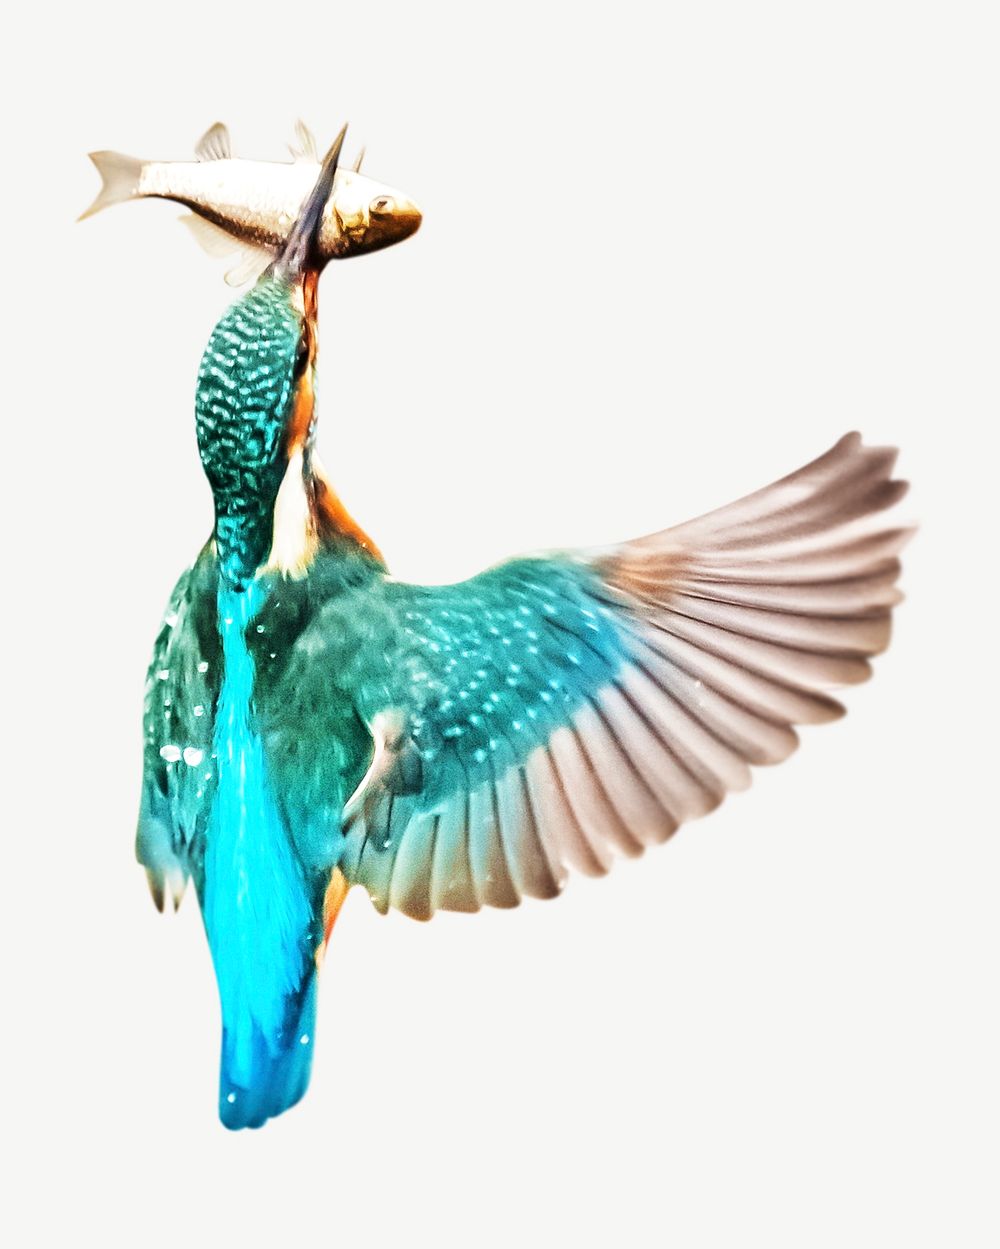 Kingfisher bird design element psd